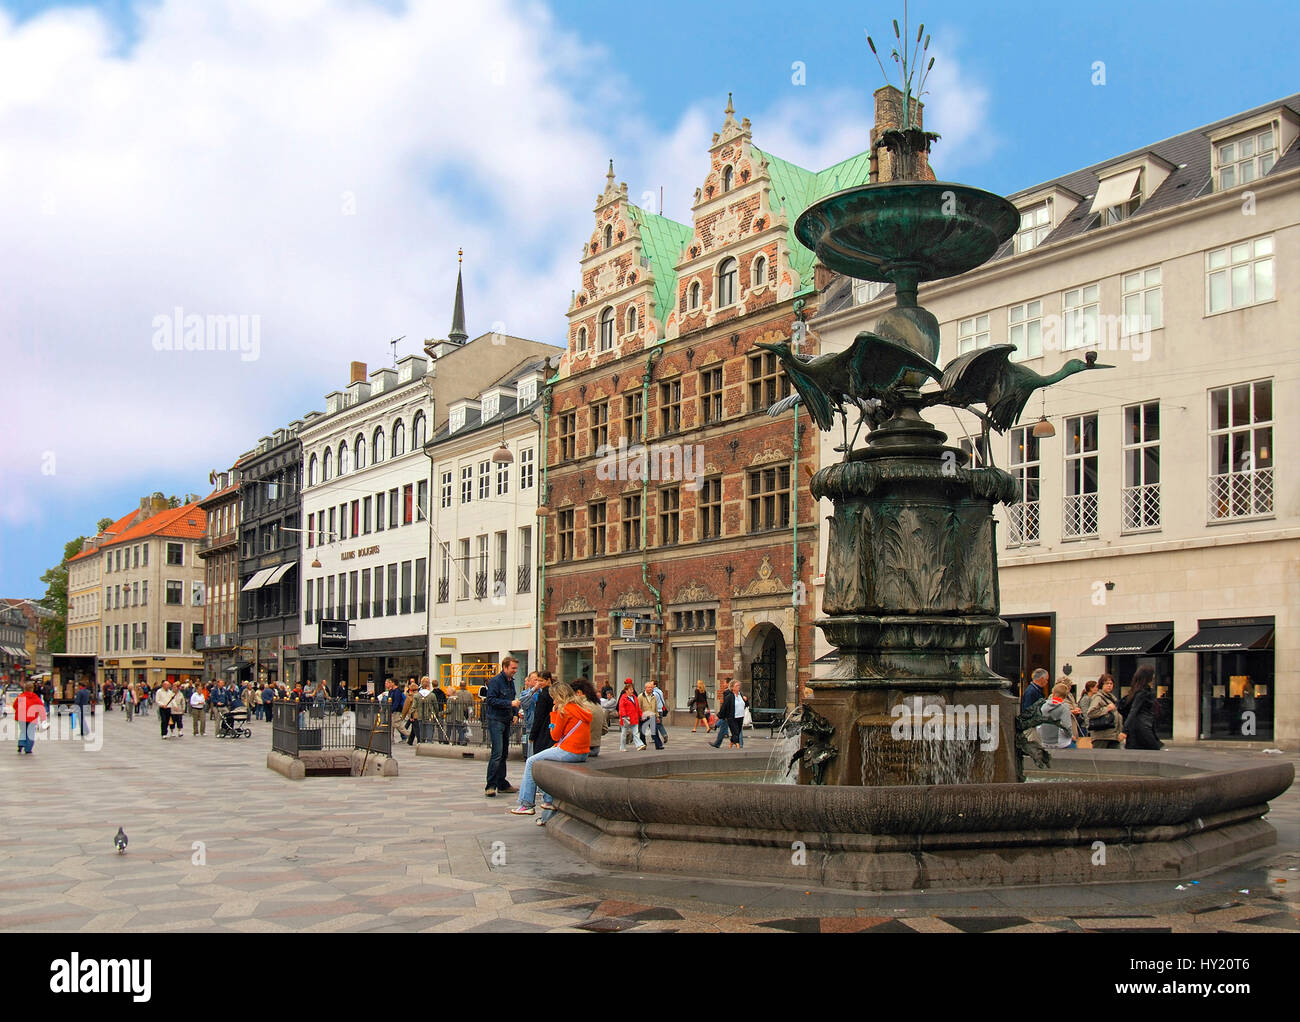 Image of the Hojbro Place in the city center of Kopenhagen, Denmark. Stock Photo